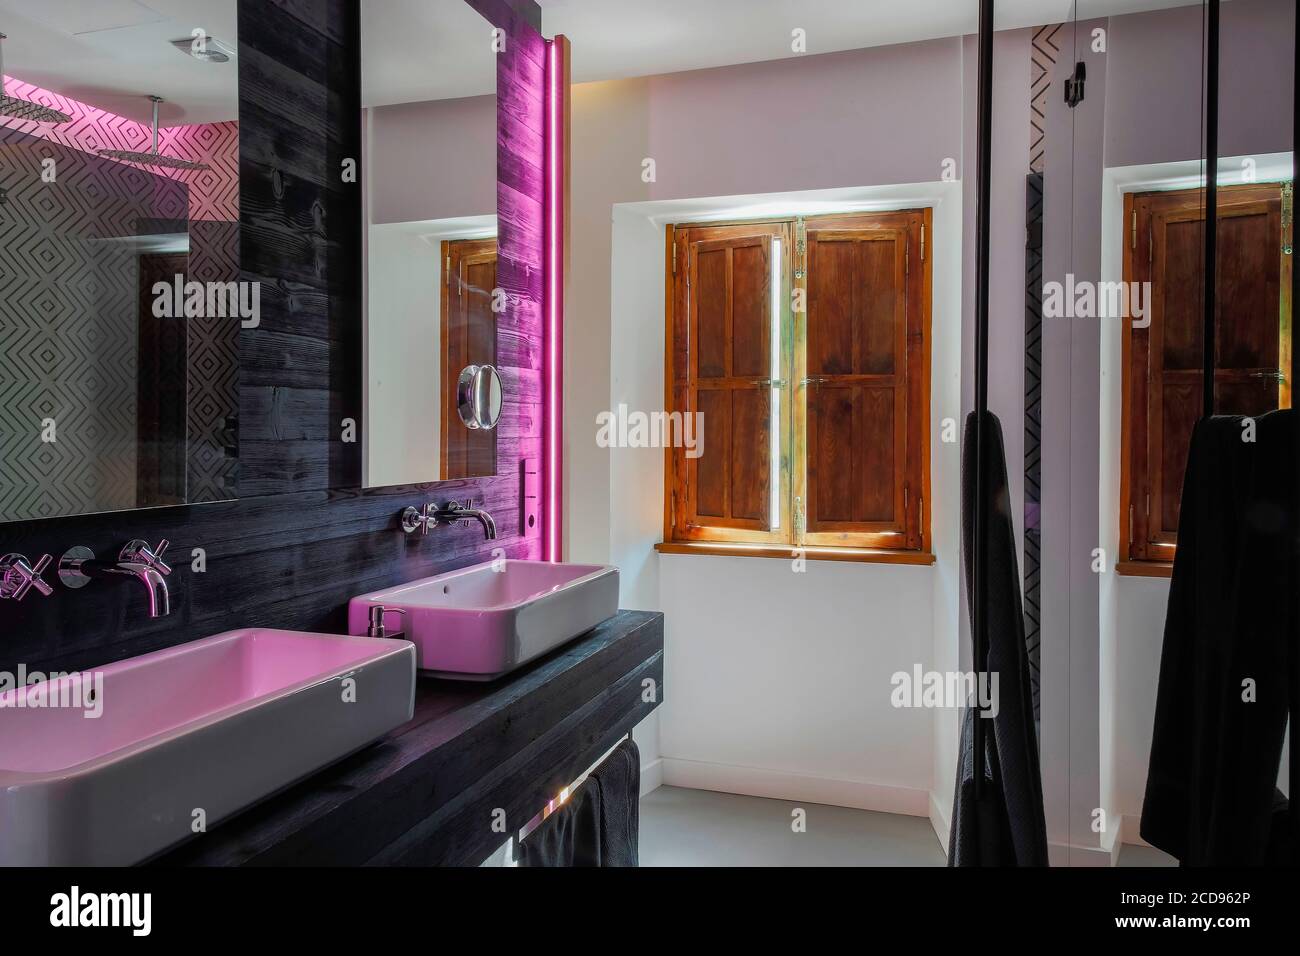 Spain, Canary Islands, La Palma, view of a bathroom of a luxury hotel Stock Photo